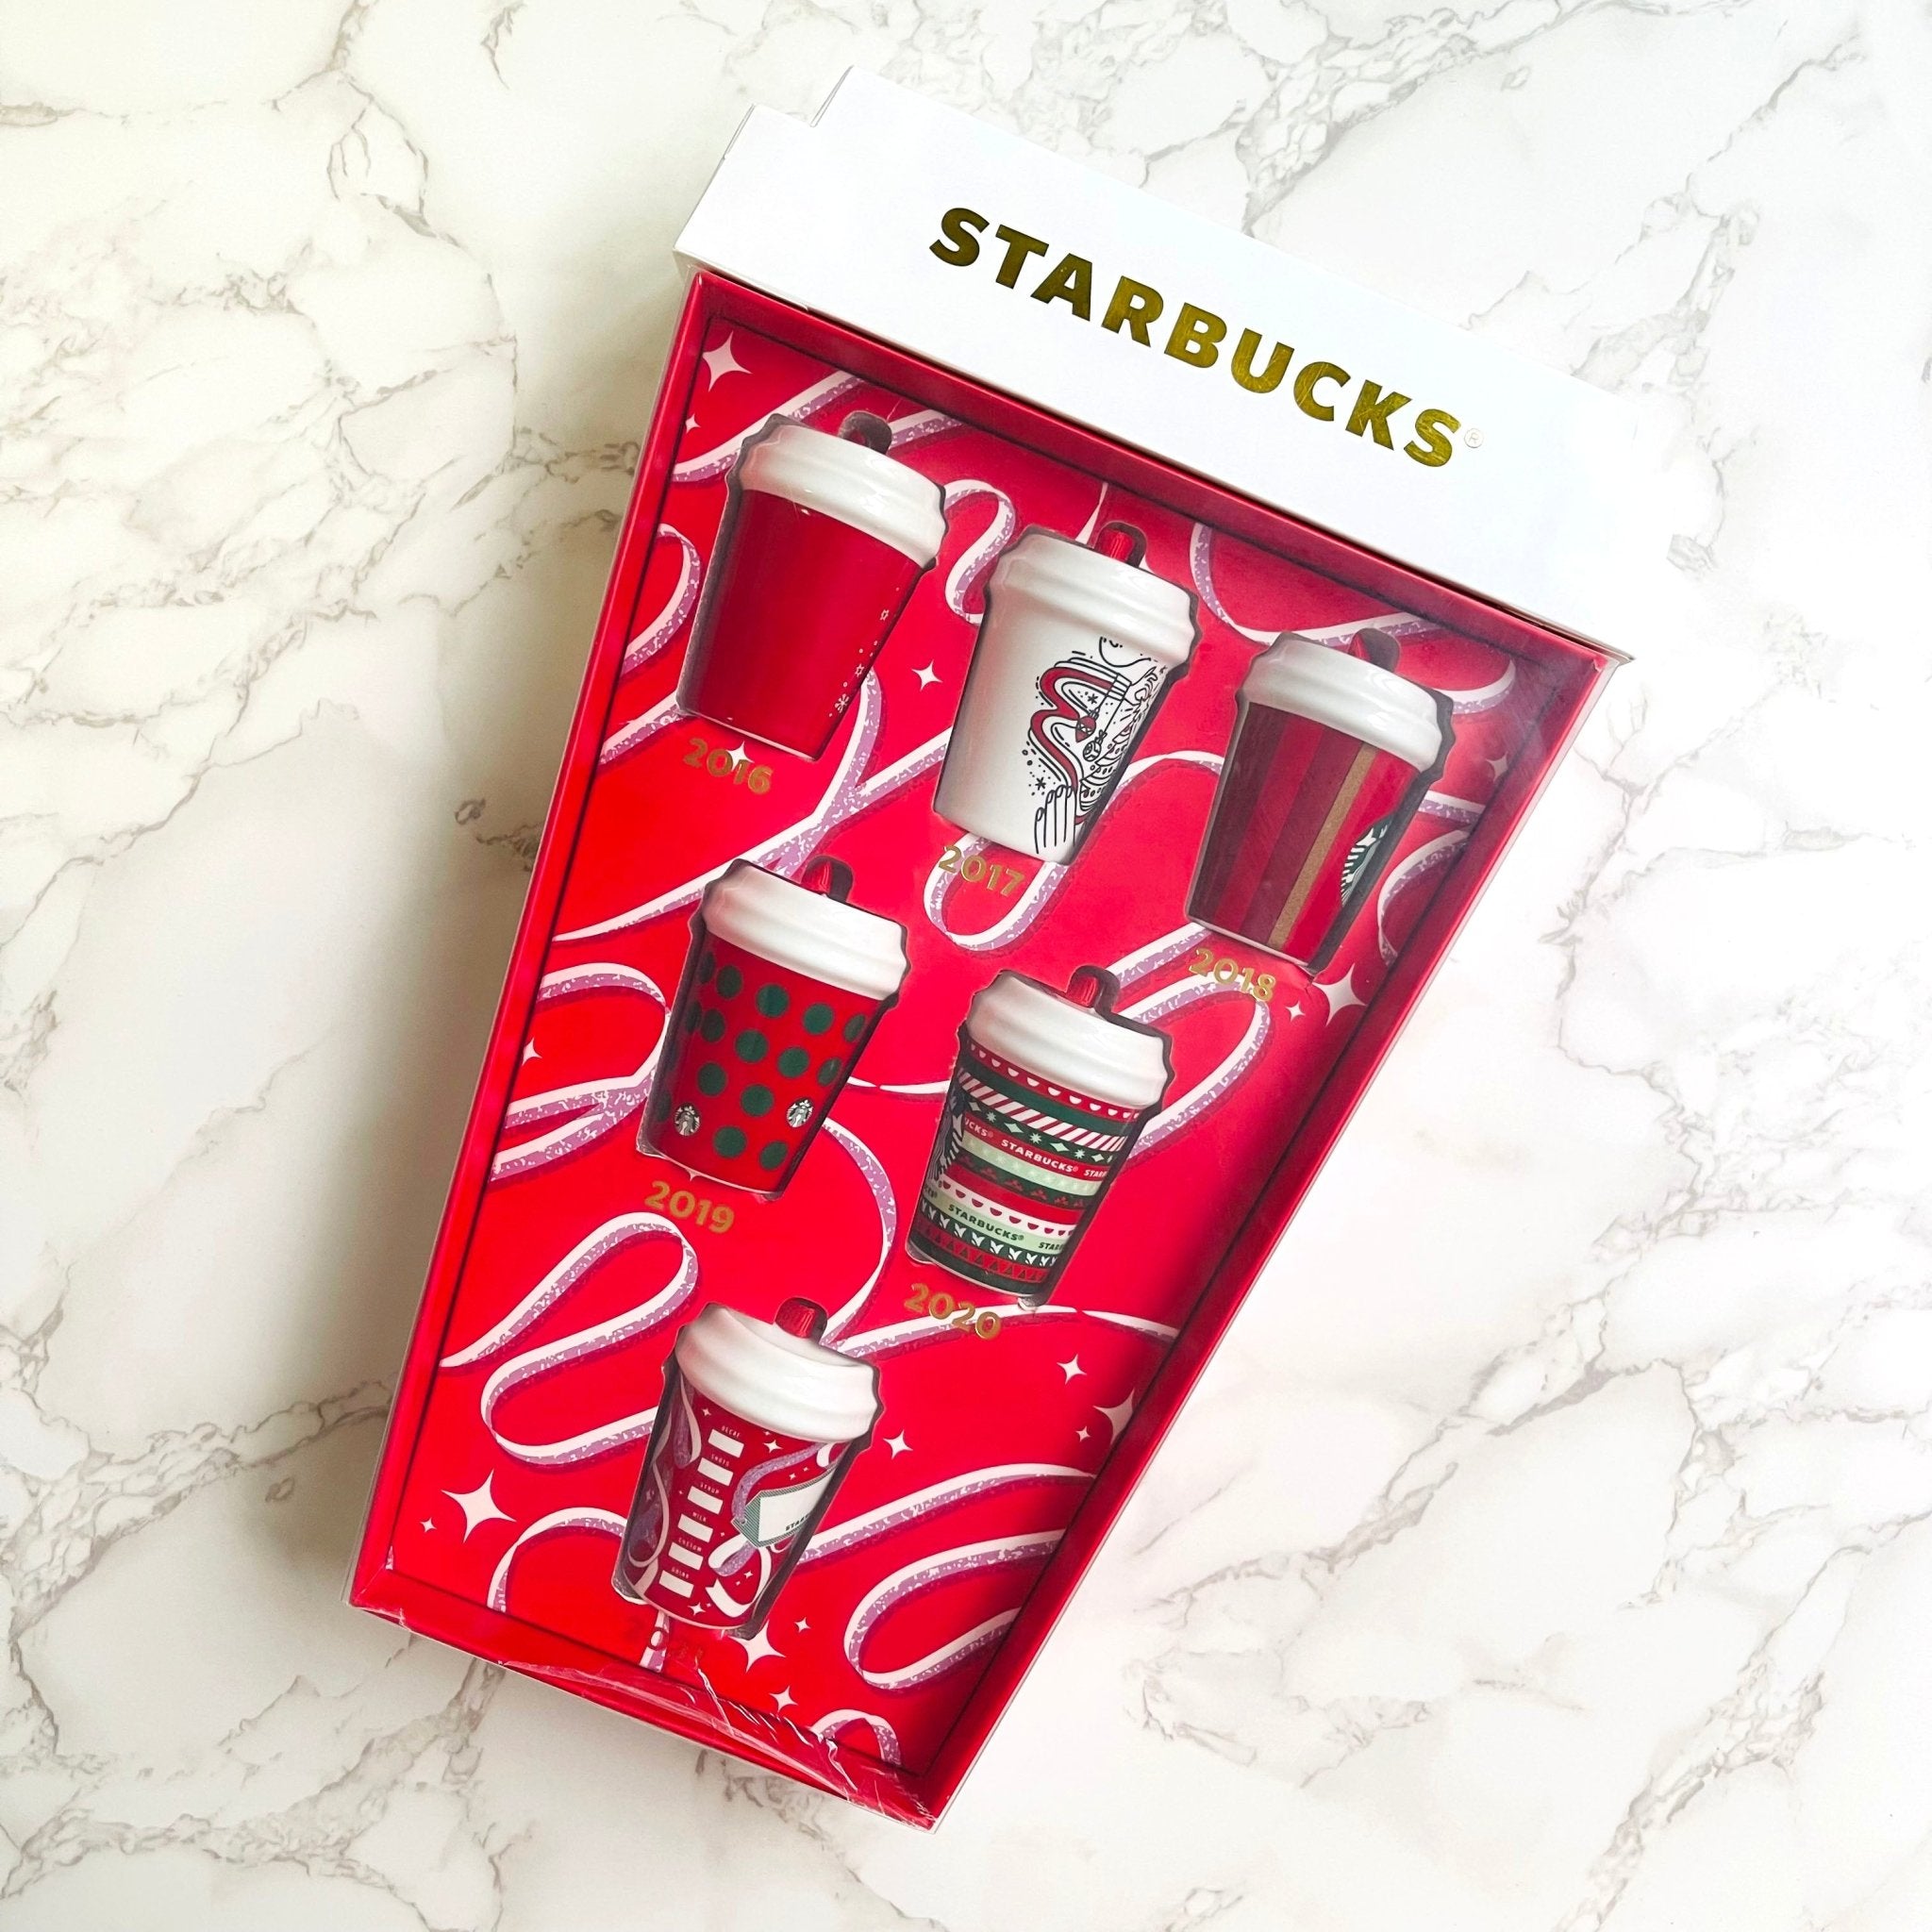 Starbucks China mini Classic red cup ornaments - one box -6 mini cups